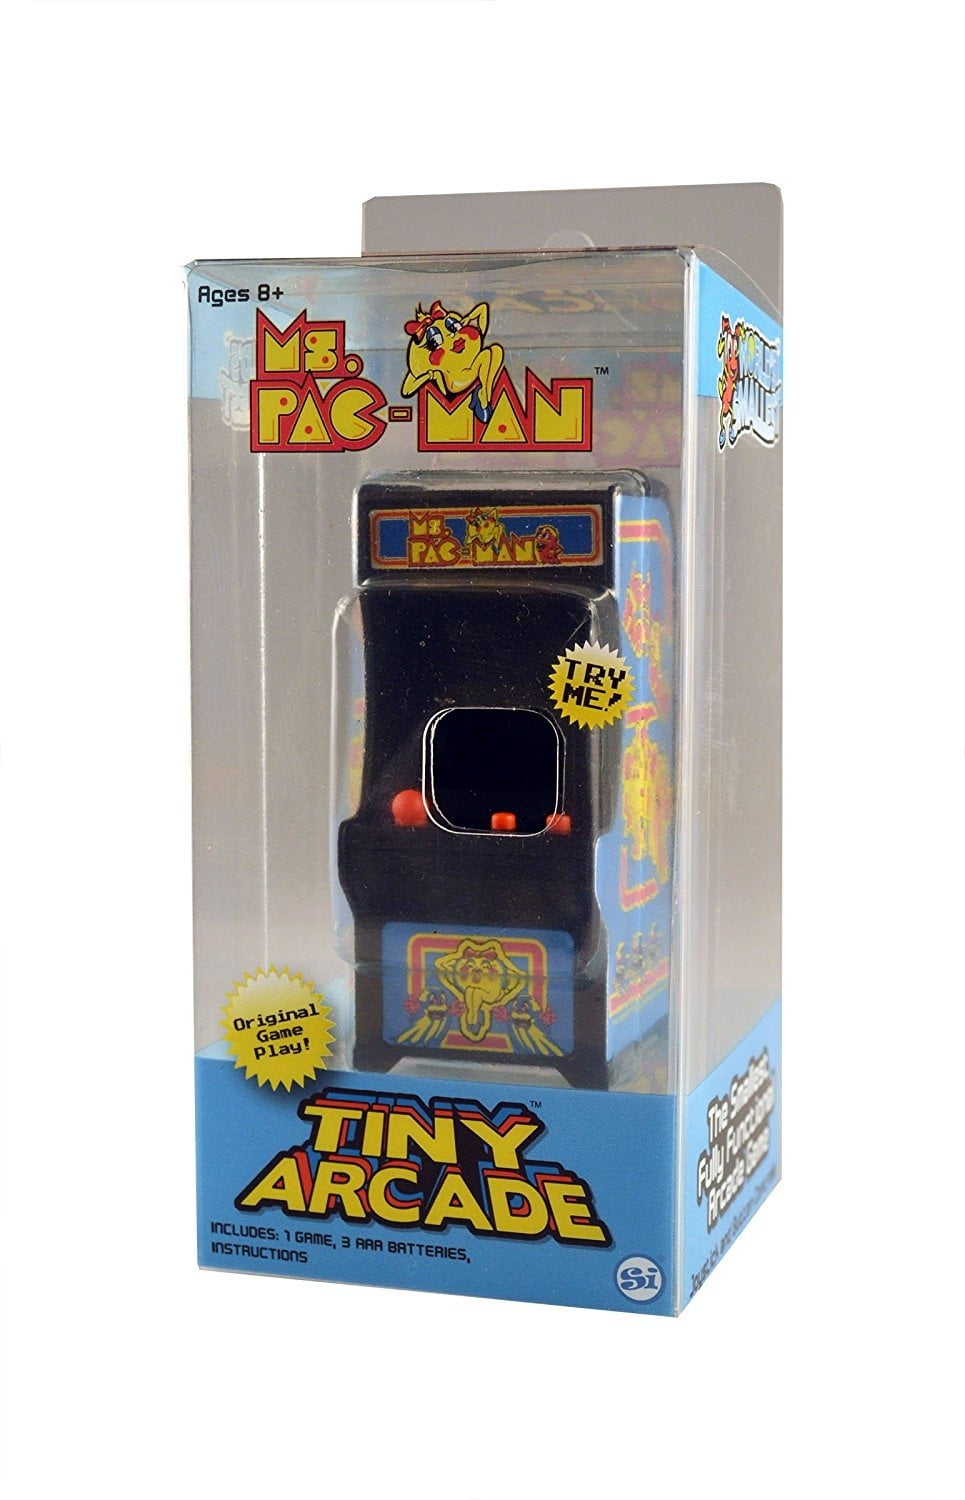 Very Cool Rare Ms Pac Man ms pac-man mini arcade game Arcade classics 